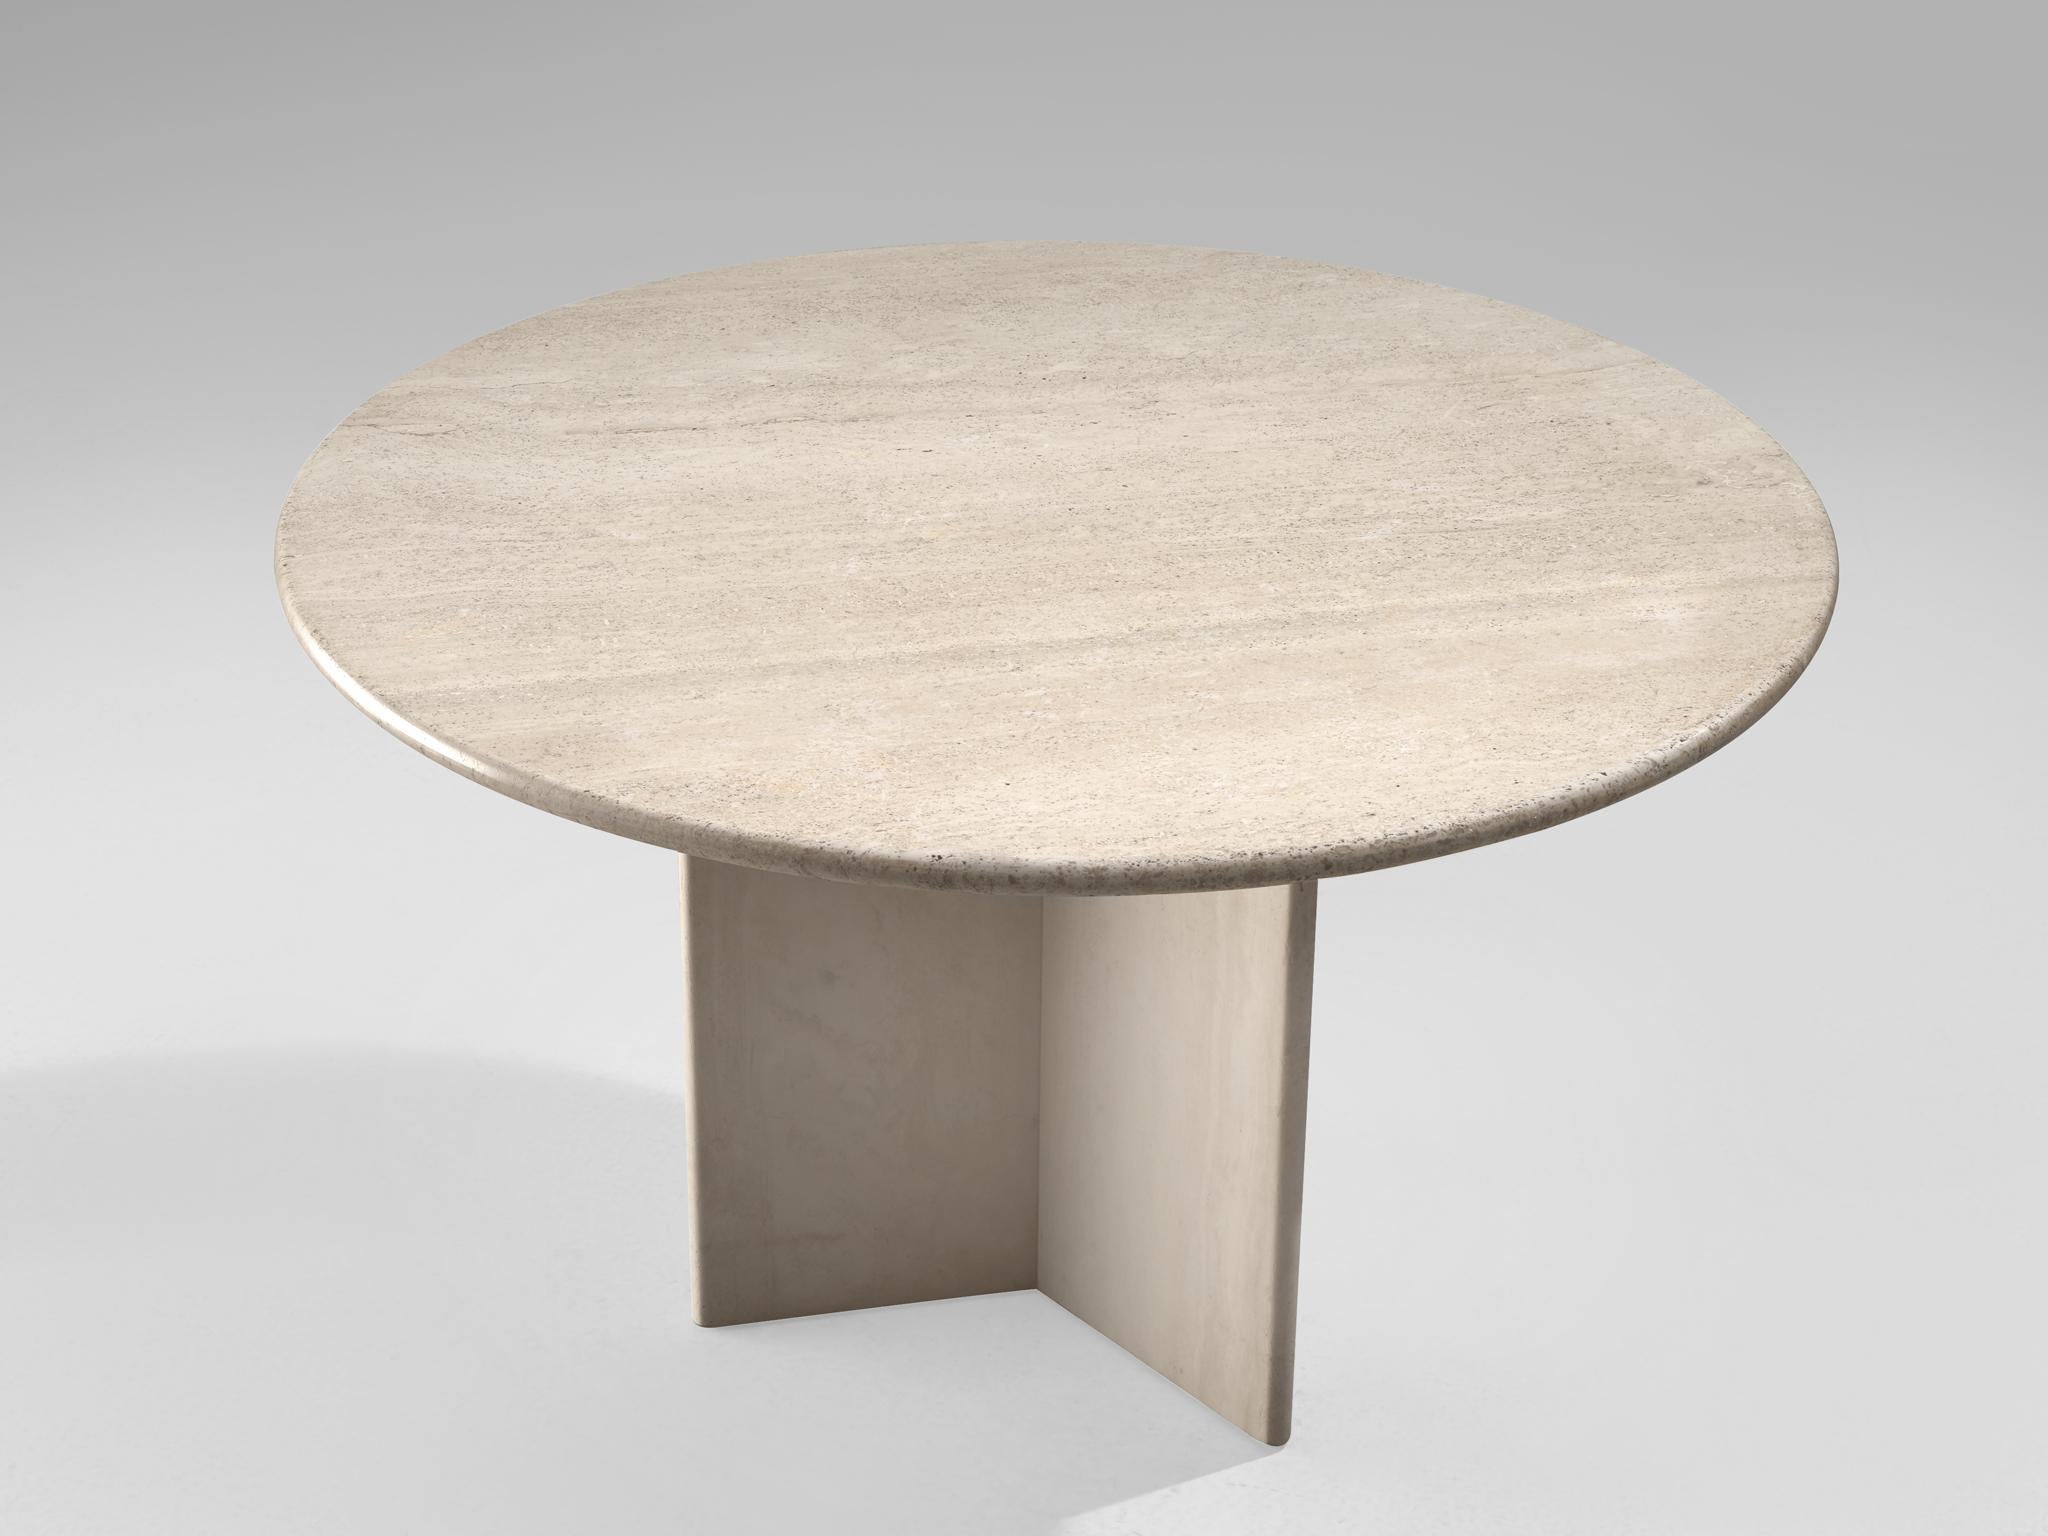 stone pedestal table base